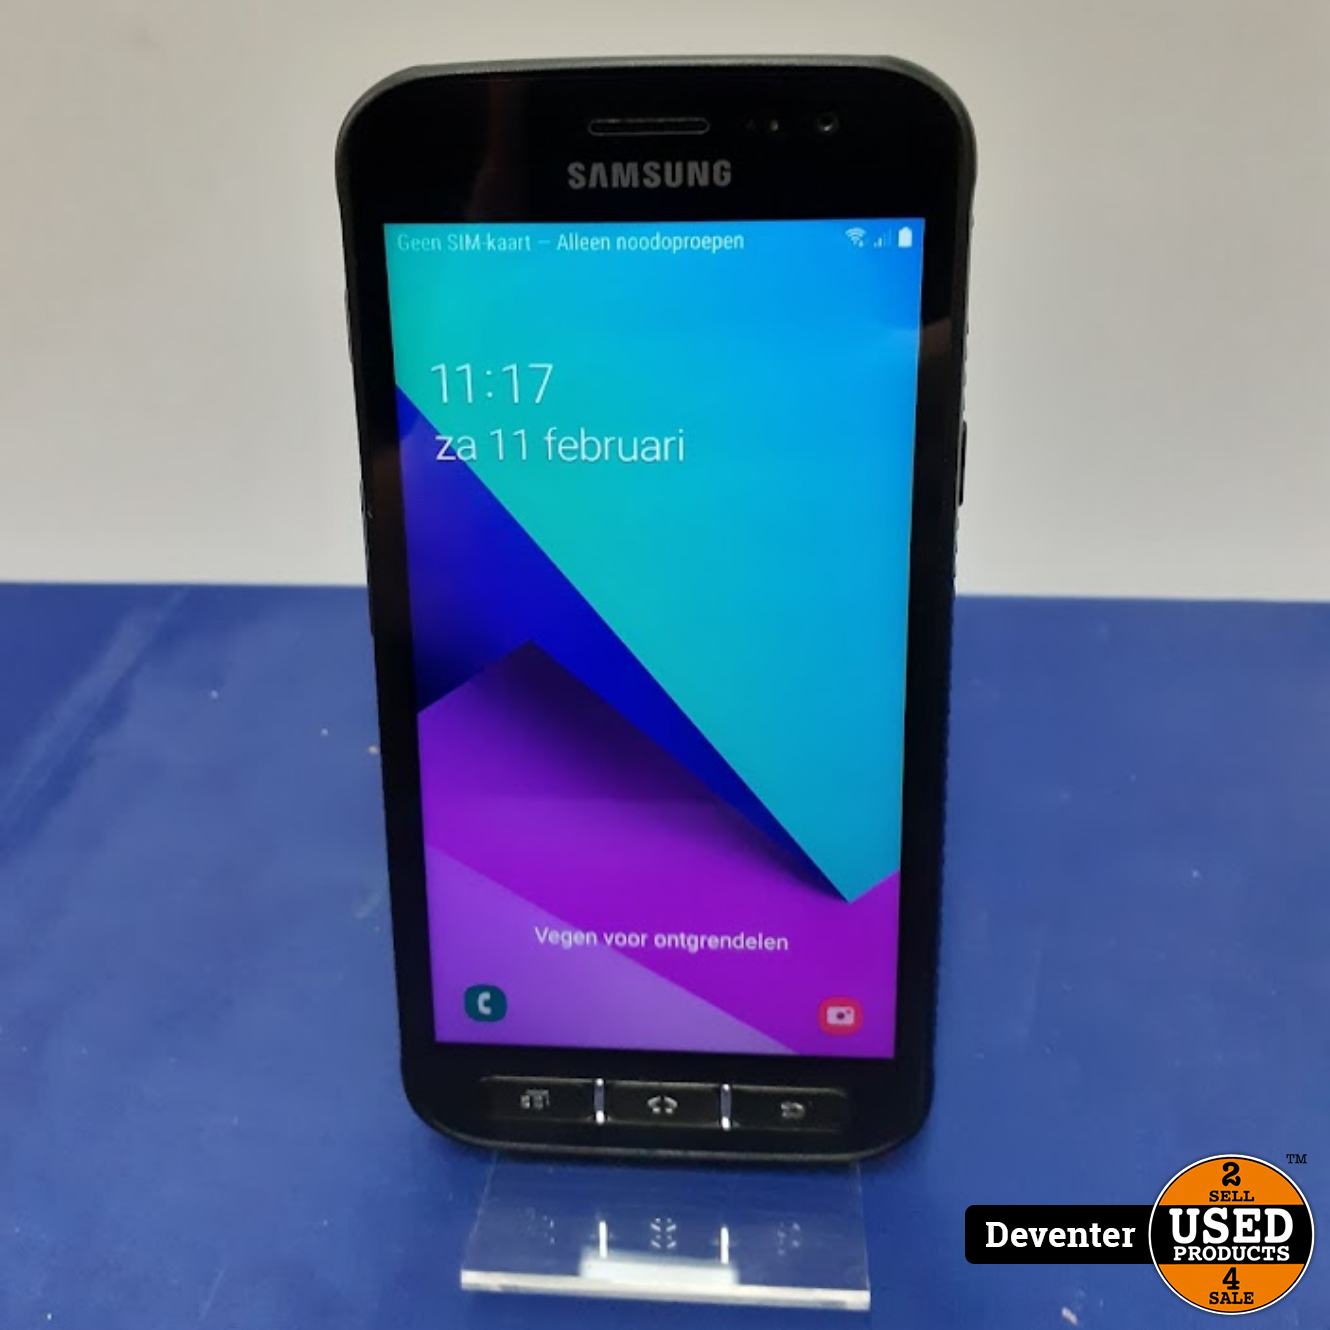 Doordringen lepel Wijzerplaat Samsung Galaxy Xcover 4 16gb || Android 8 - Used Products Deventer